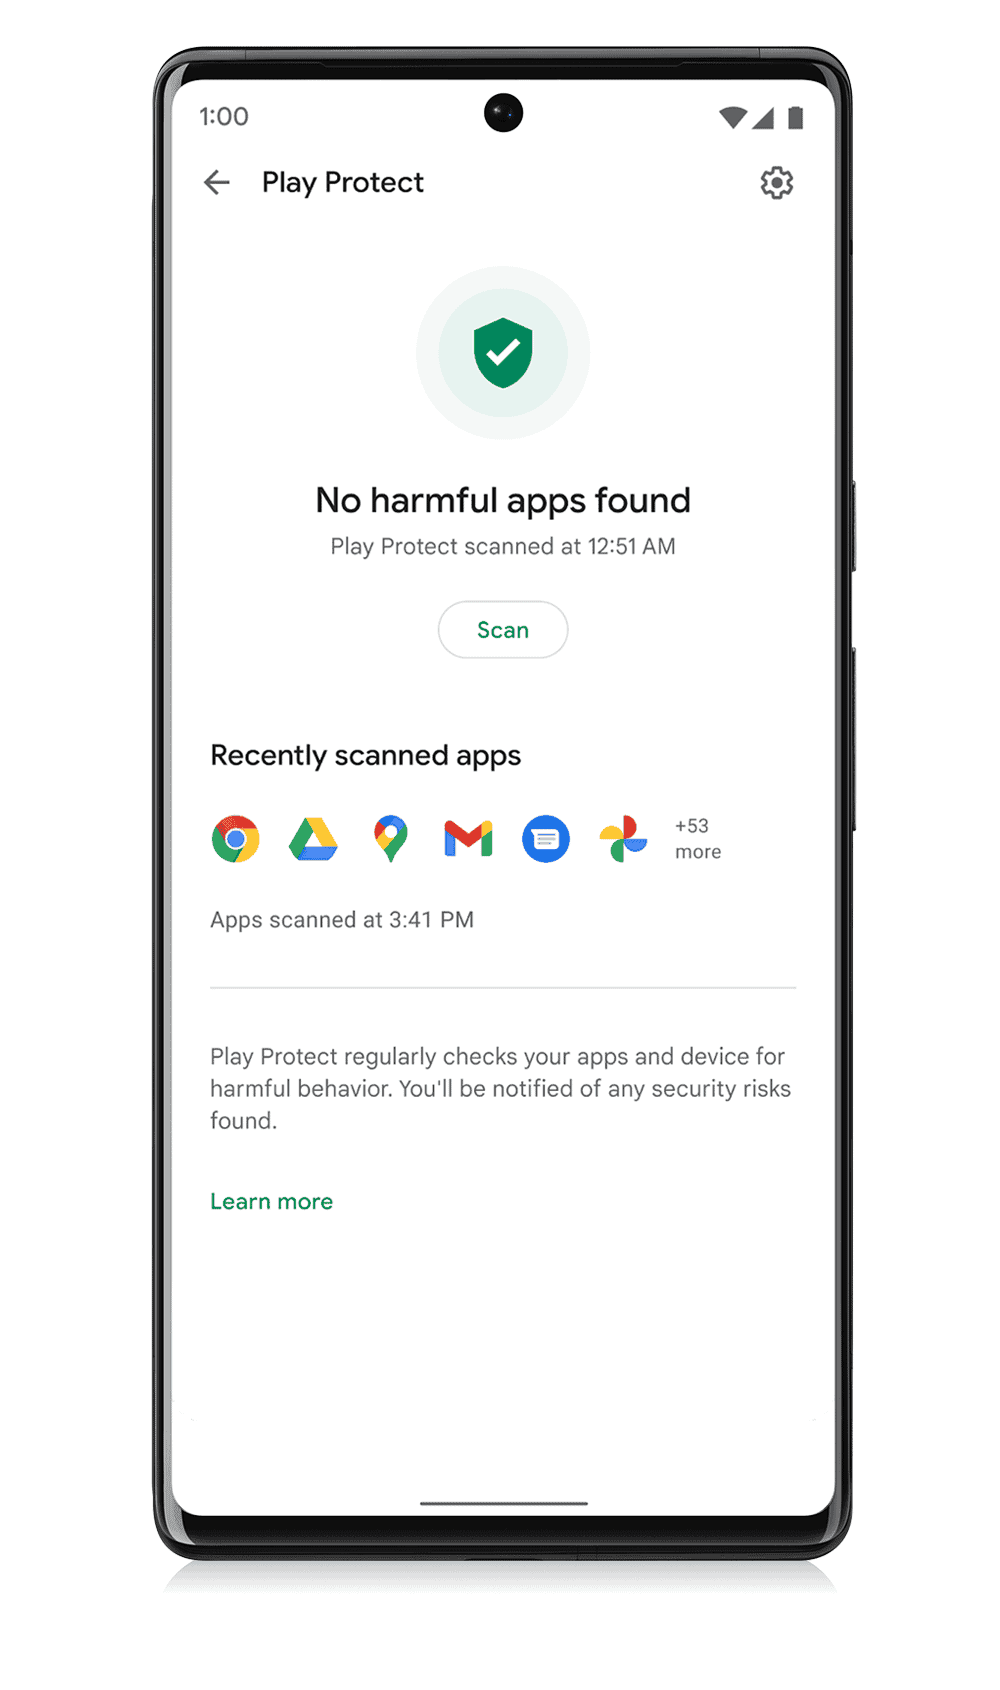 Anti Theft Alarm - Apps on Google Play